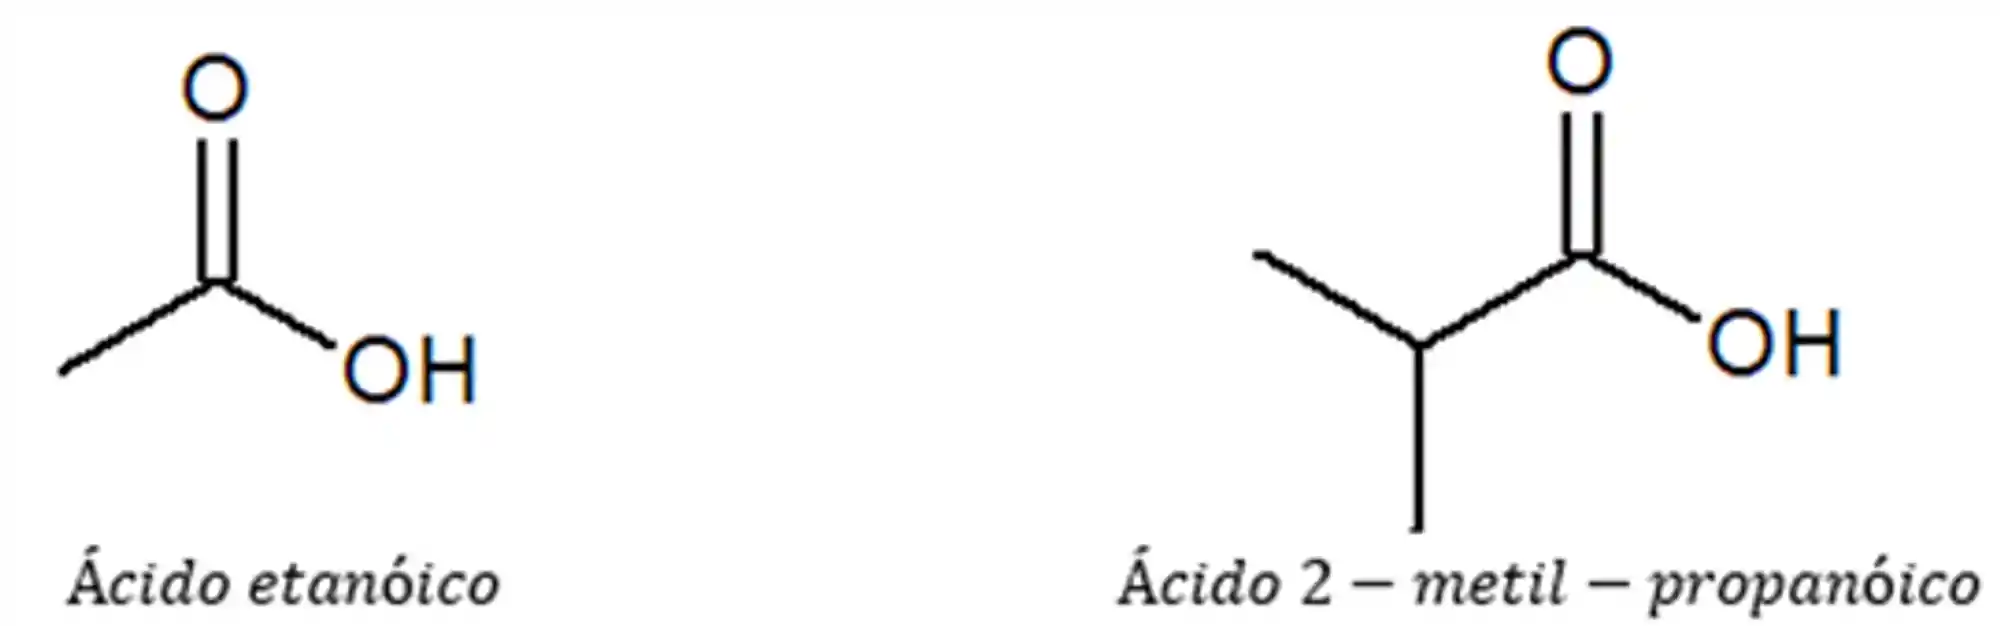 Nomeclatura do ácido carboxílico: Exemplos